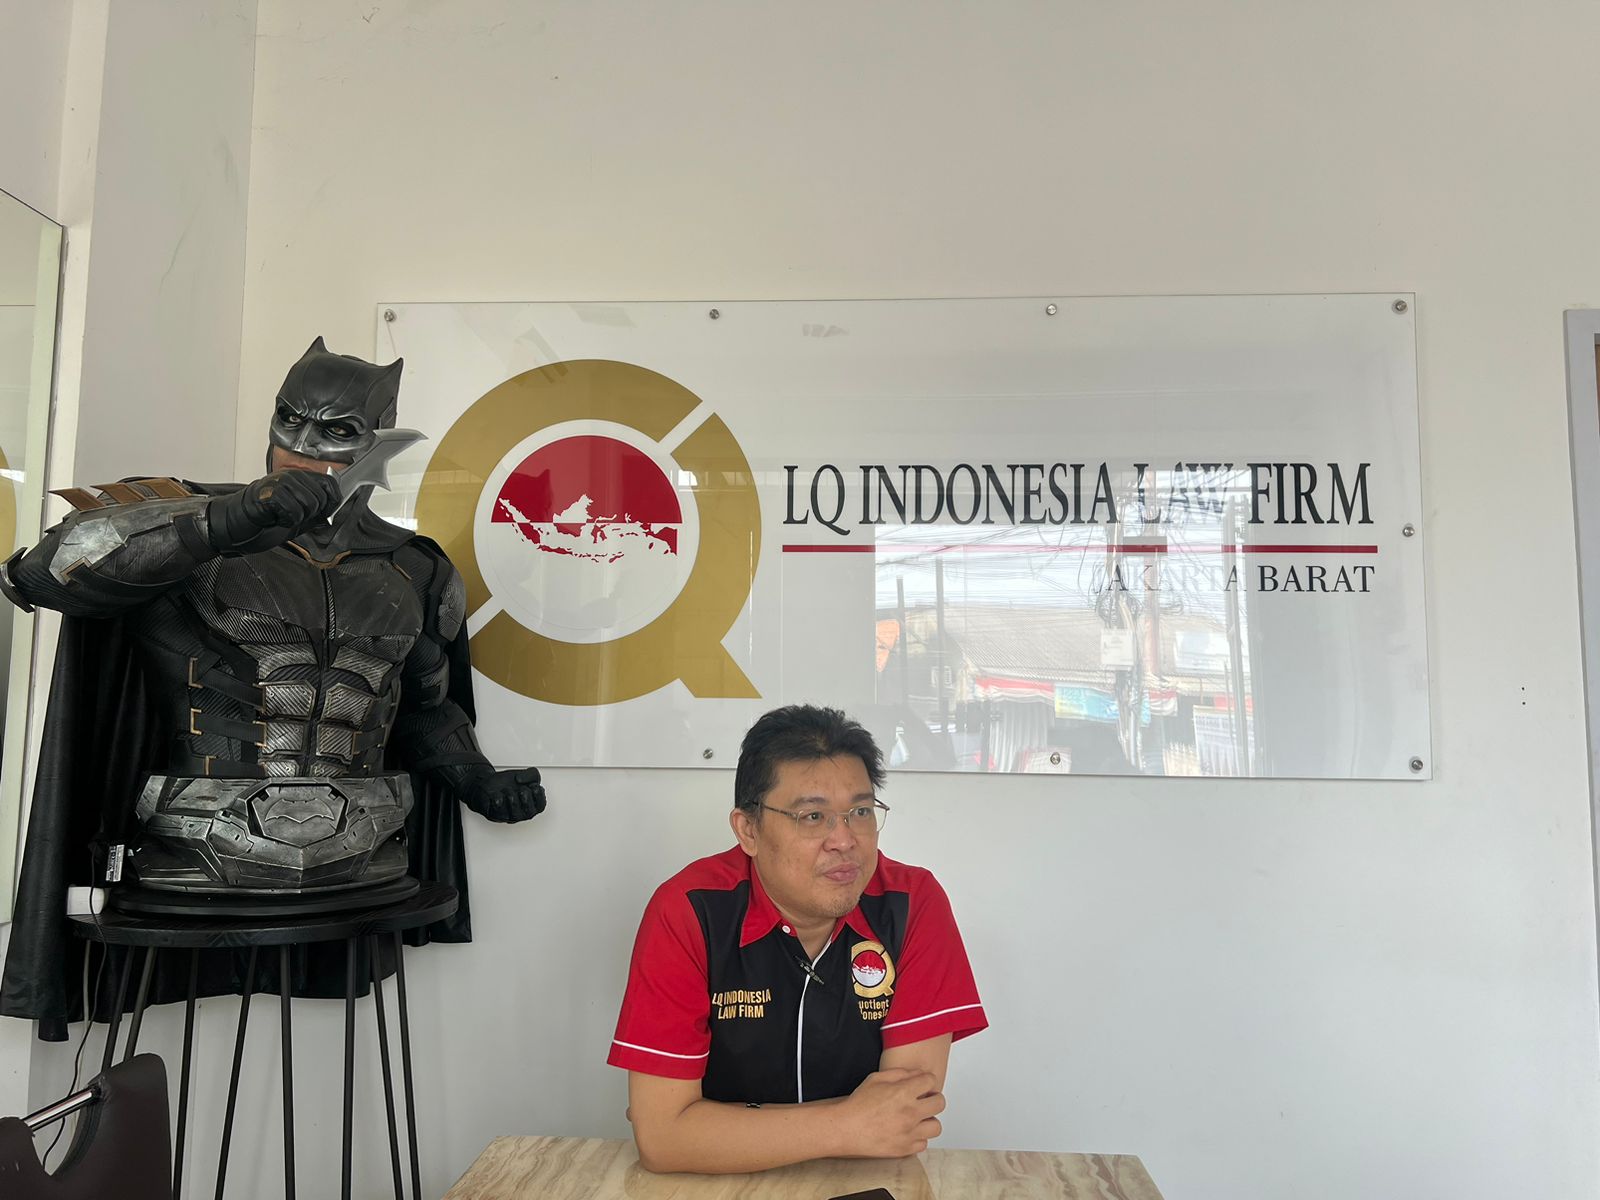 Alvin Lim Prihatin Markas Judi Digerebek Masyarakat di Semarang, Padahal Sudah di-Spill ke Polisi Sejak Setahun Lalu